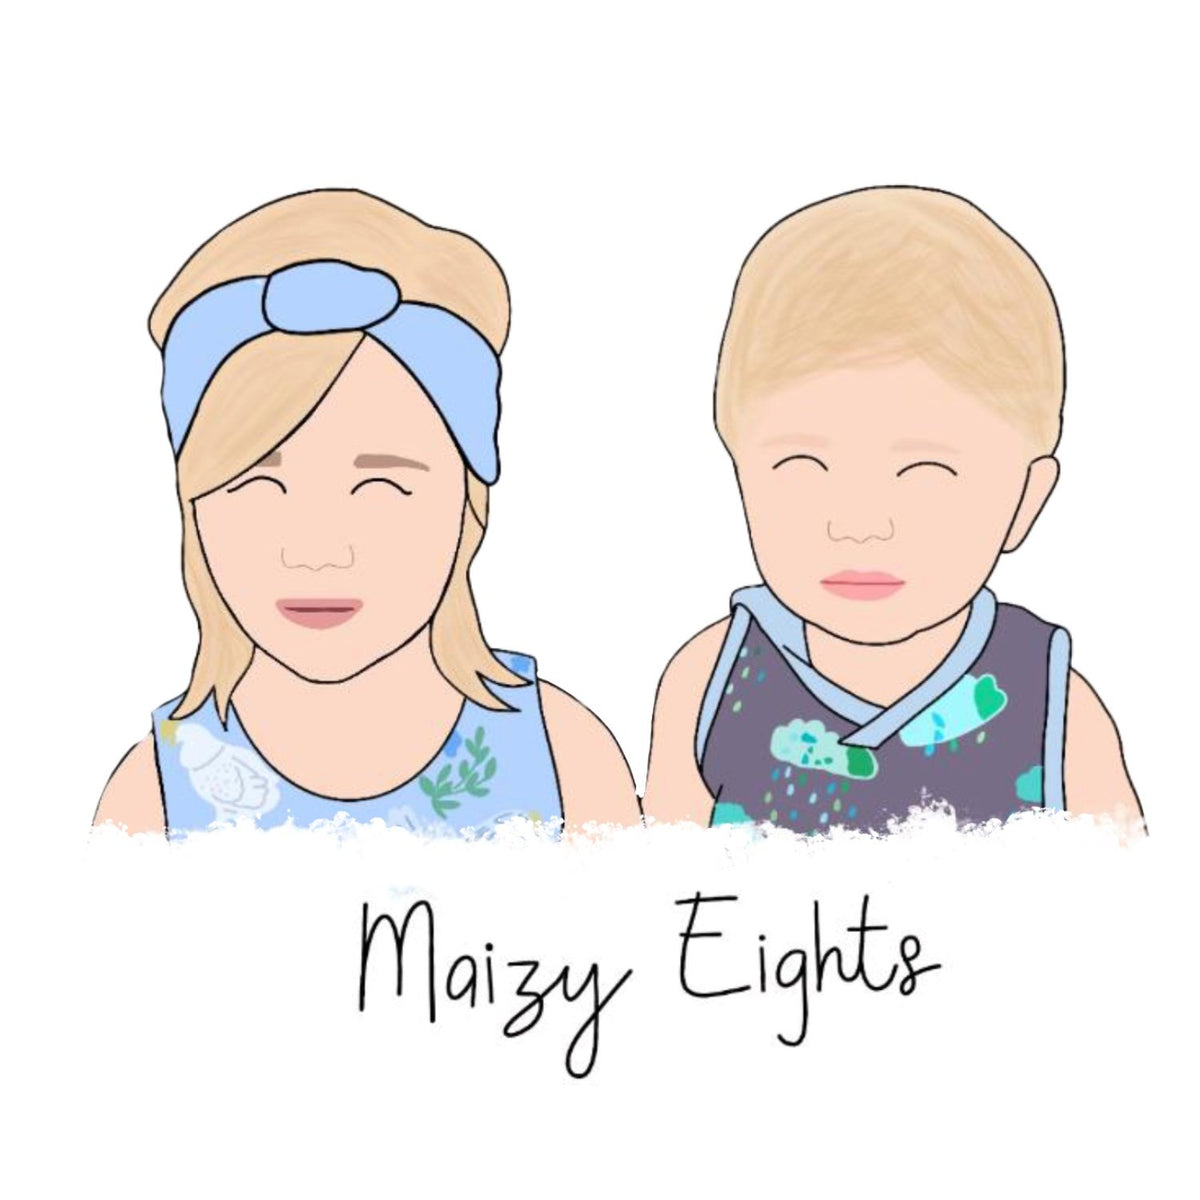 Maizy Eights